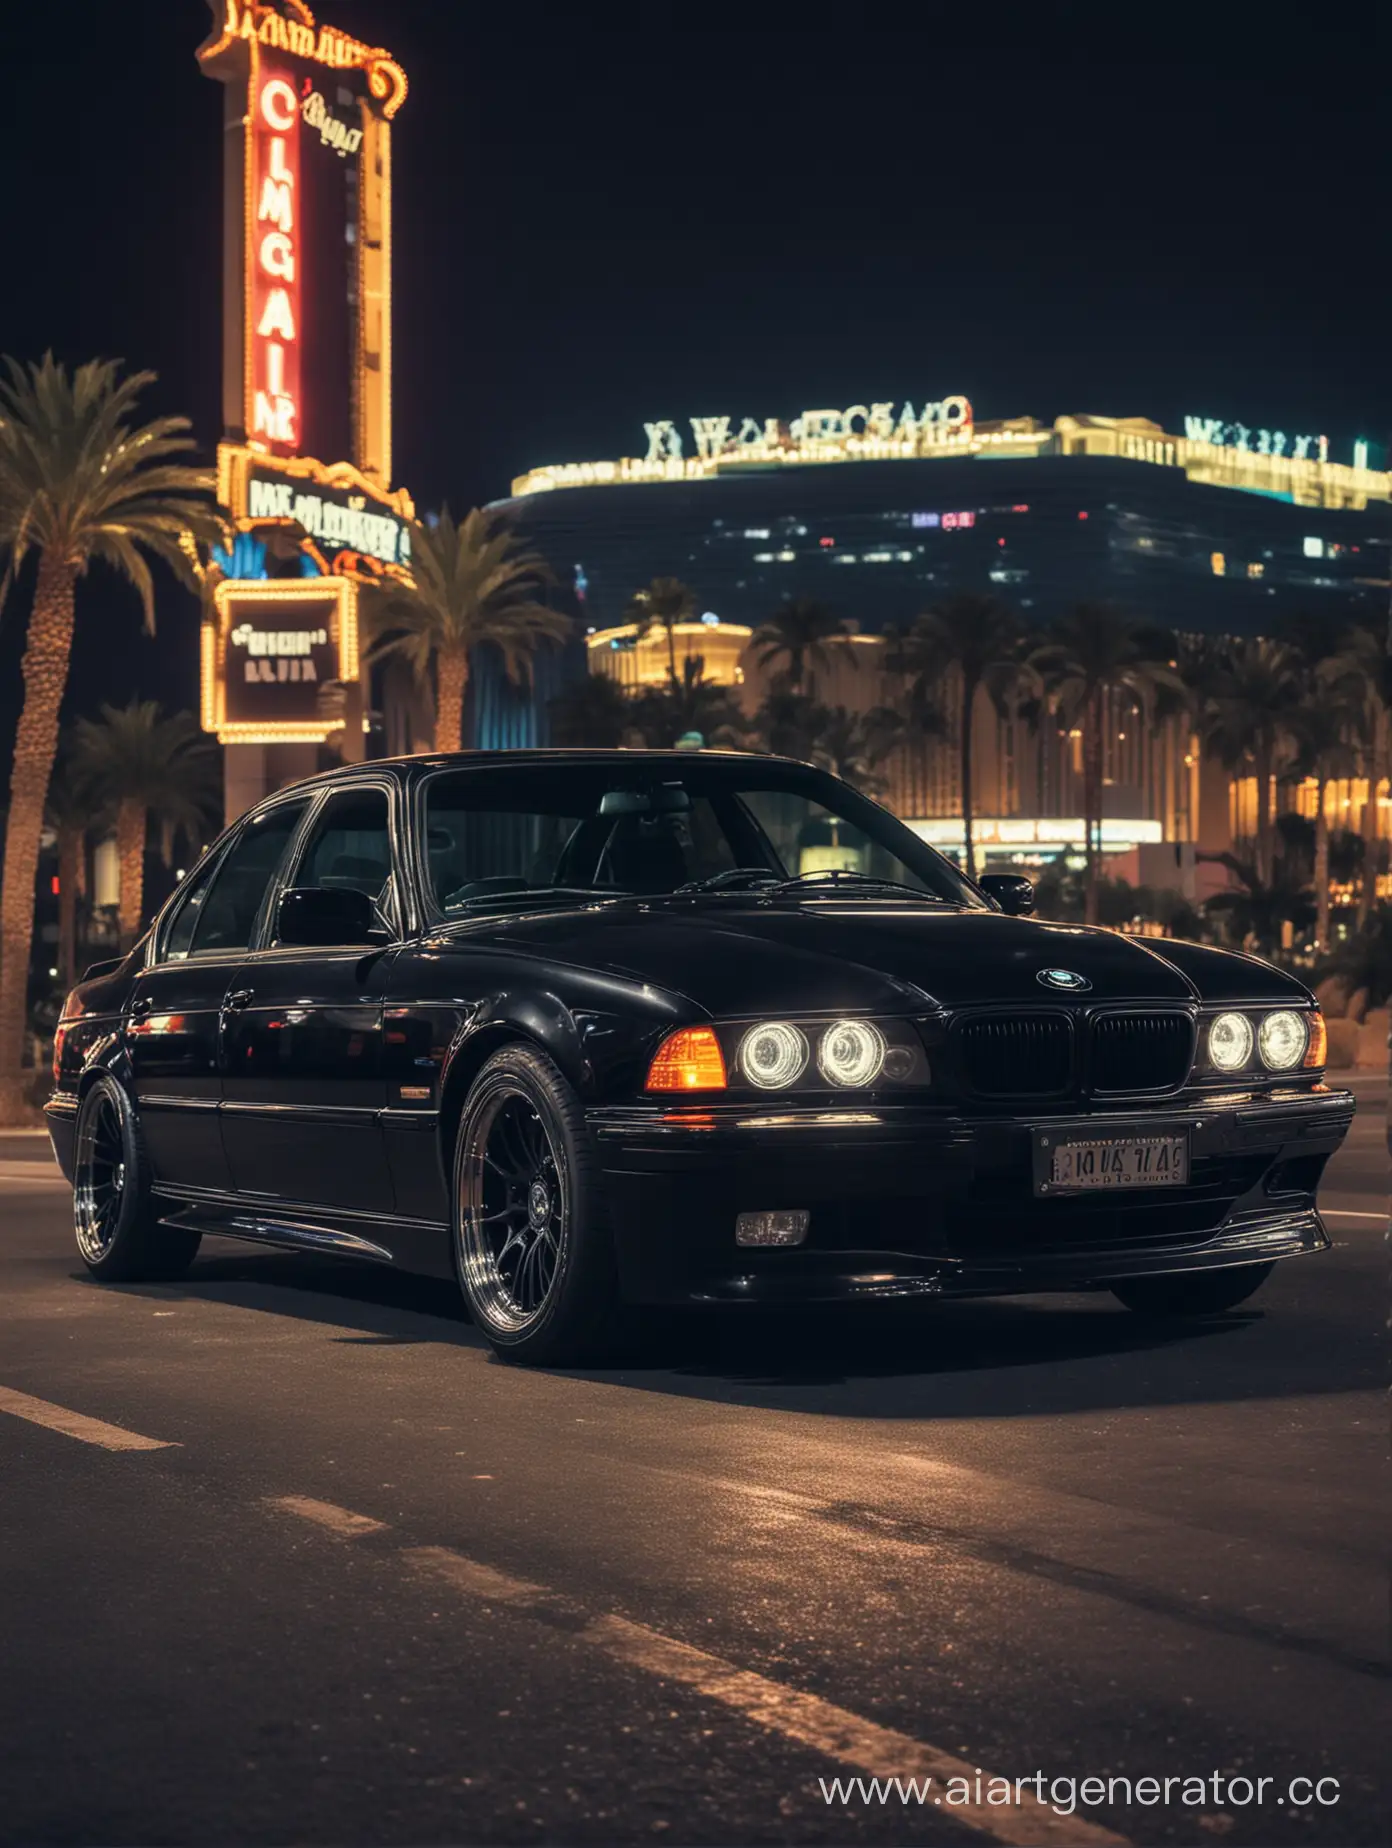 Menacing-Black-BMW-E38-Against-Neonlit-Las-Vegas-Casino-Backdrop